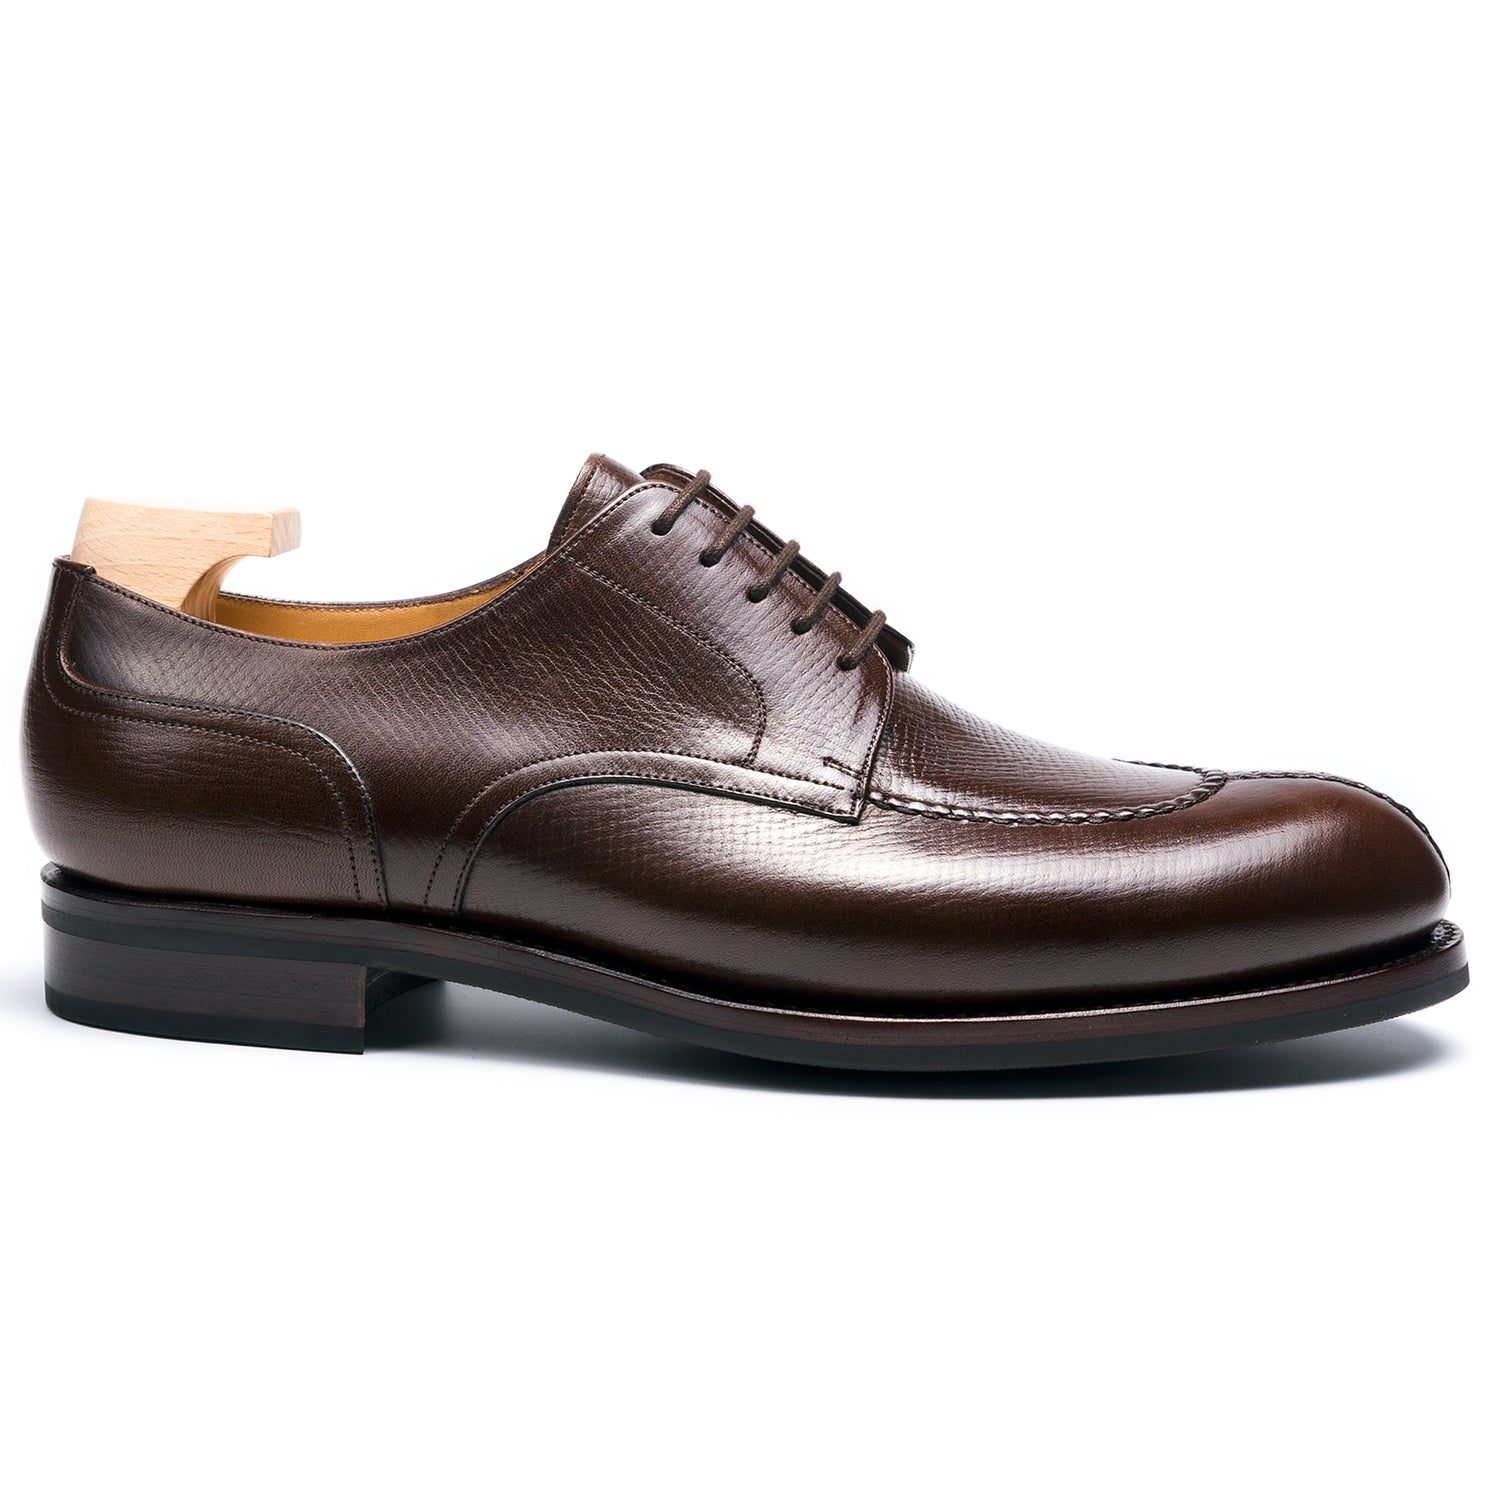 TLB Mallorca leather shoes 534 / HOWARD / HATCH GRAIN DARK BROWN